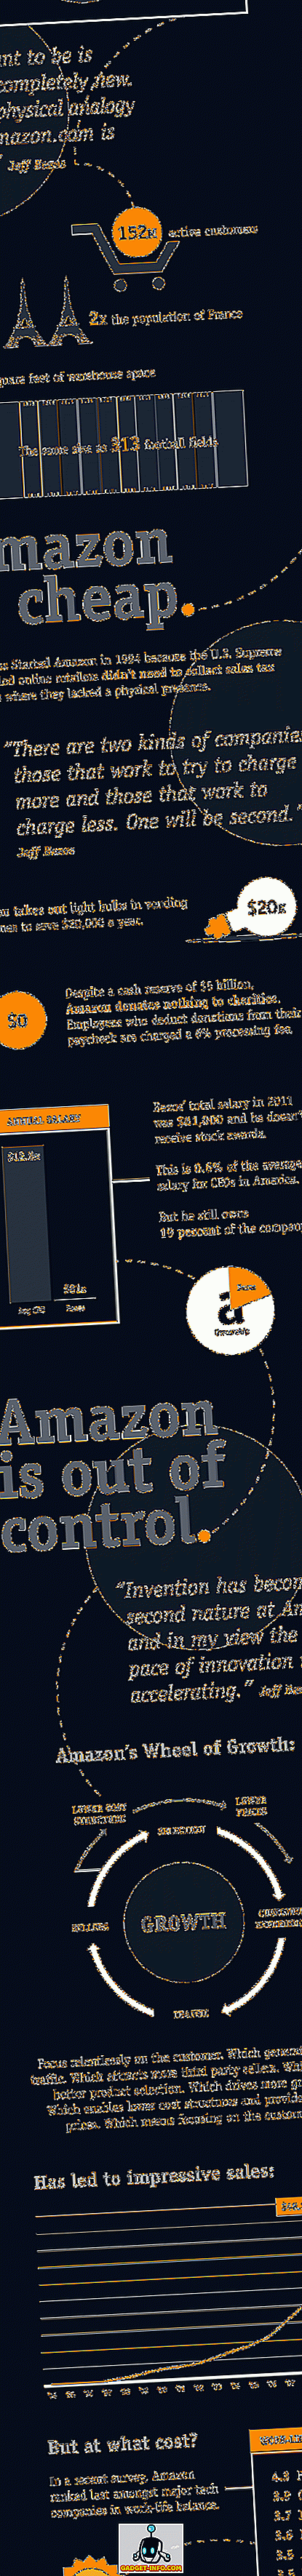 Amazon - Câu chuyện bên trong [Infographic]